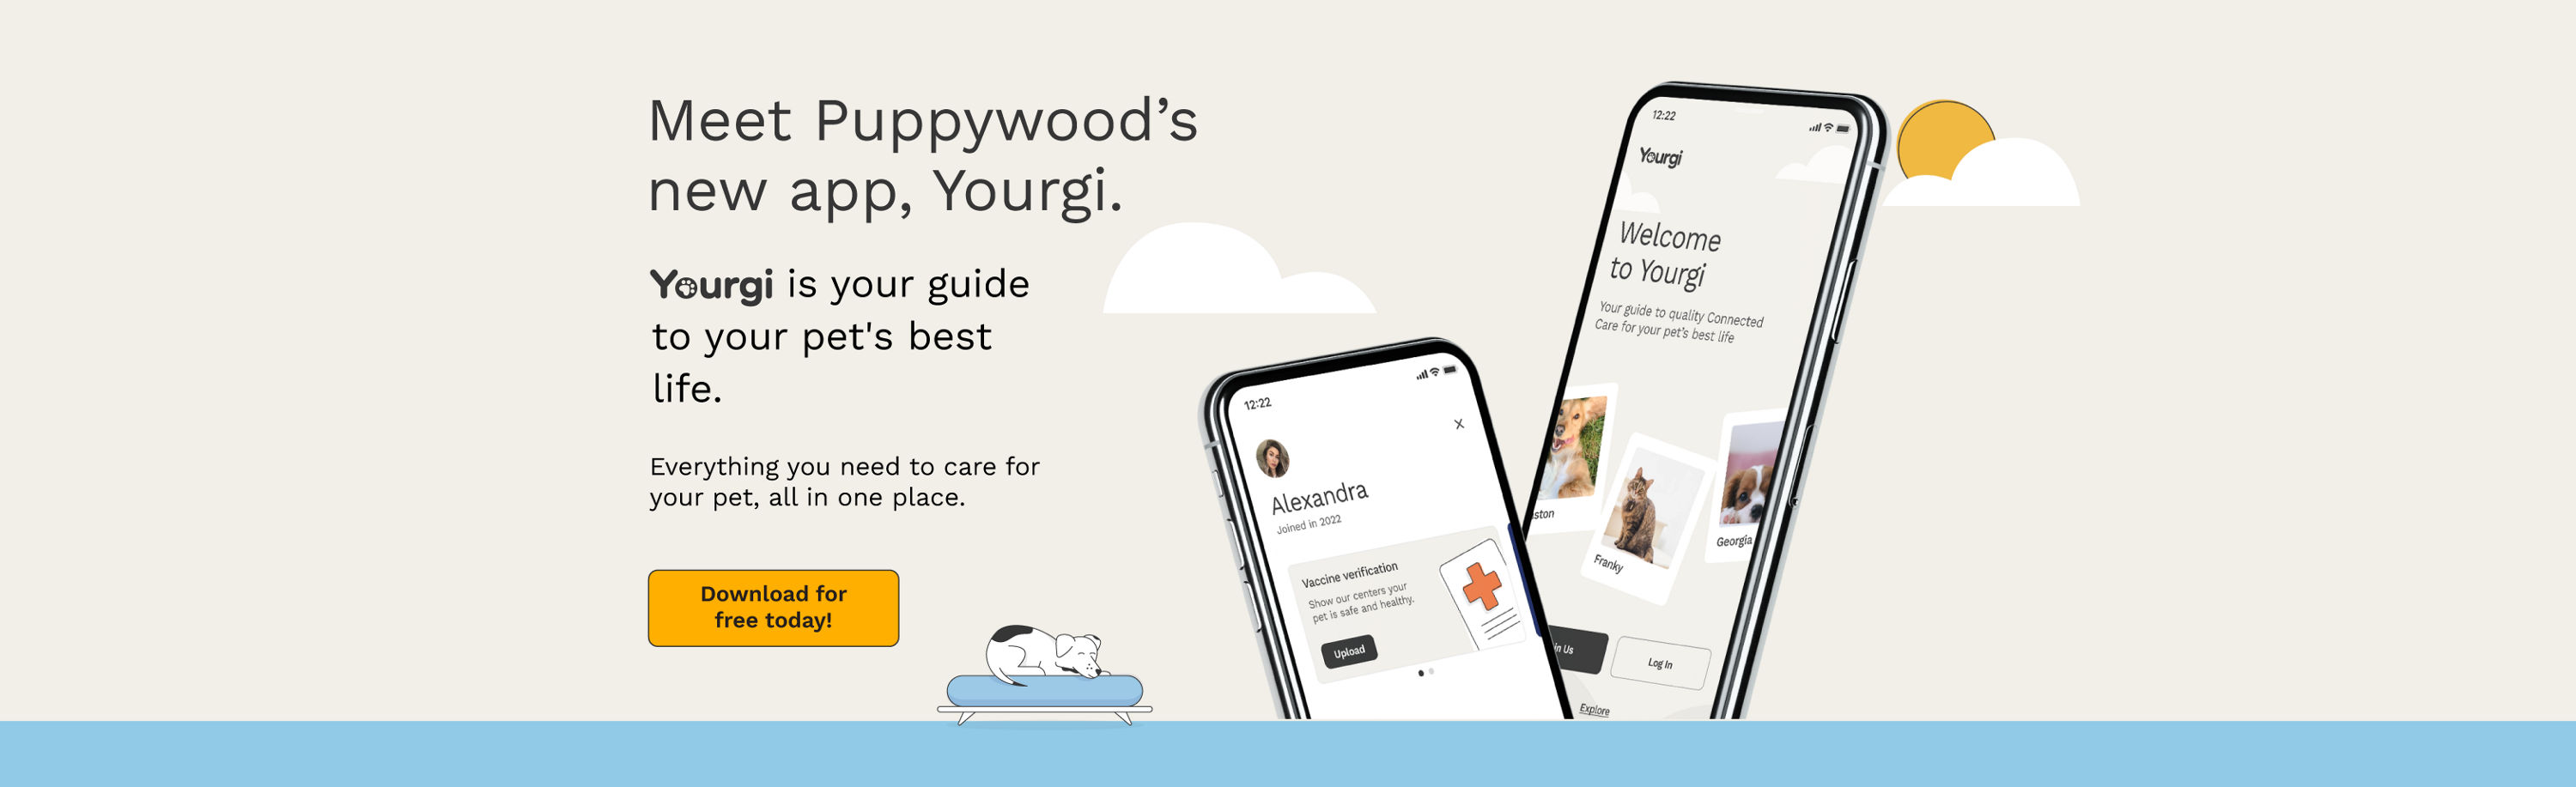 Meet Puppywood's new app, Yourgi.